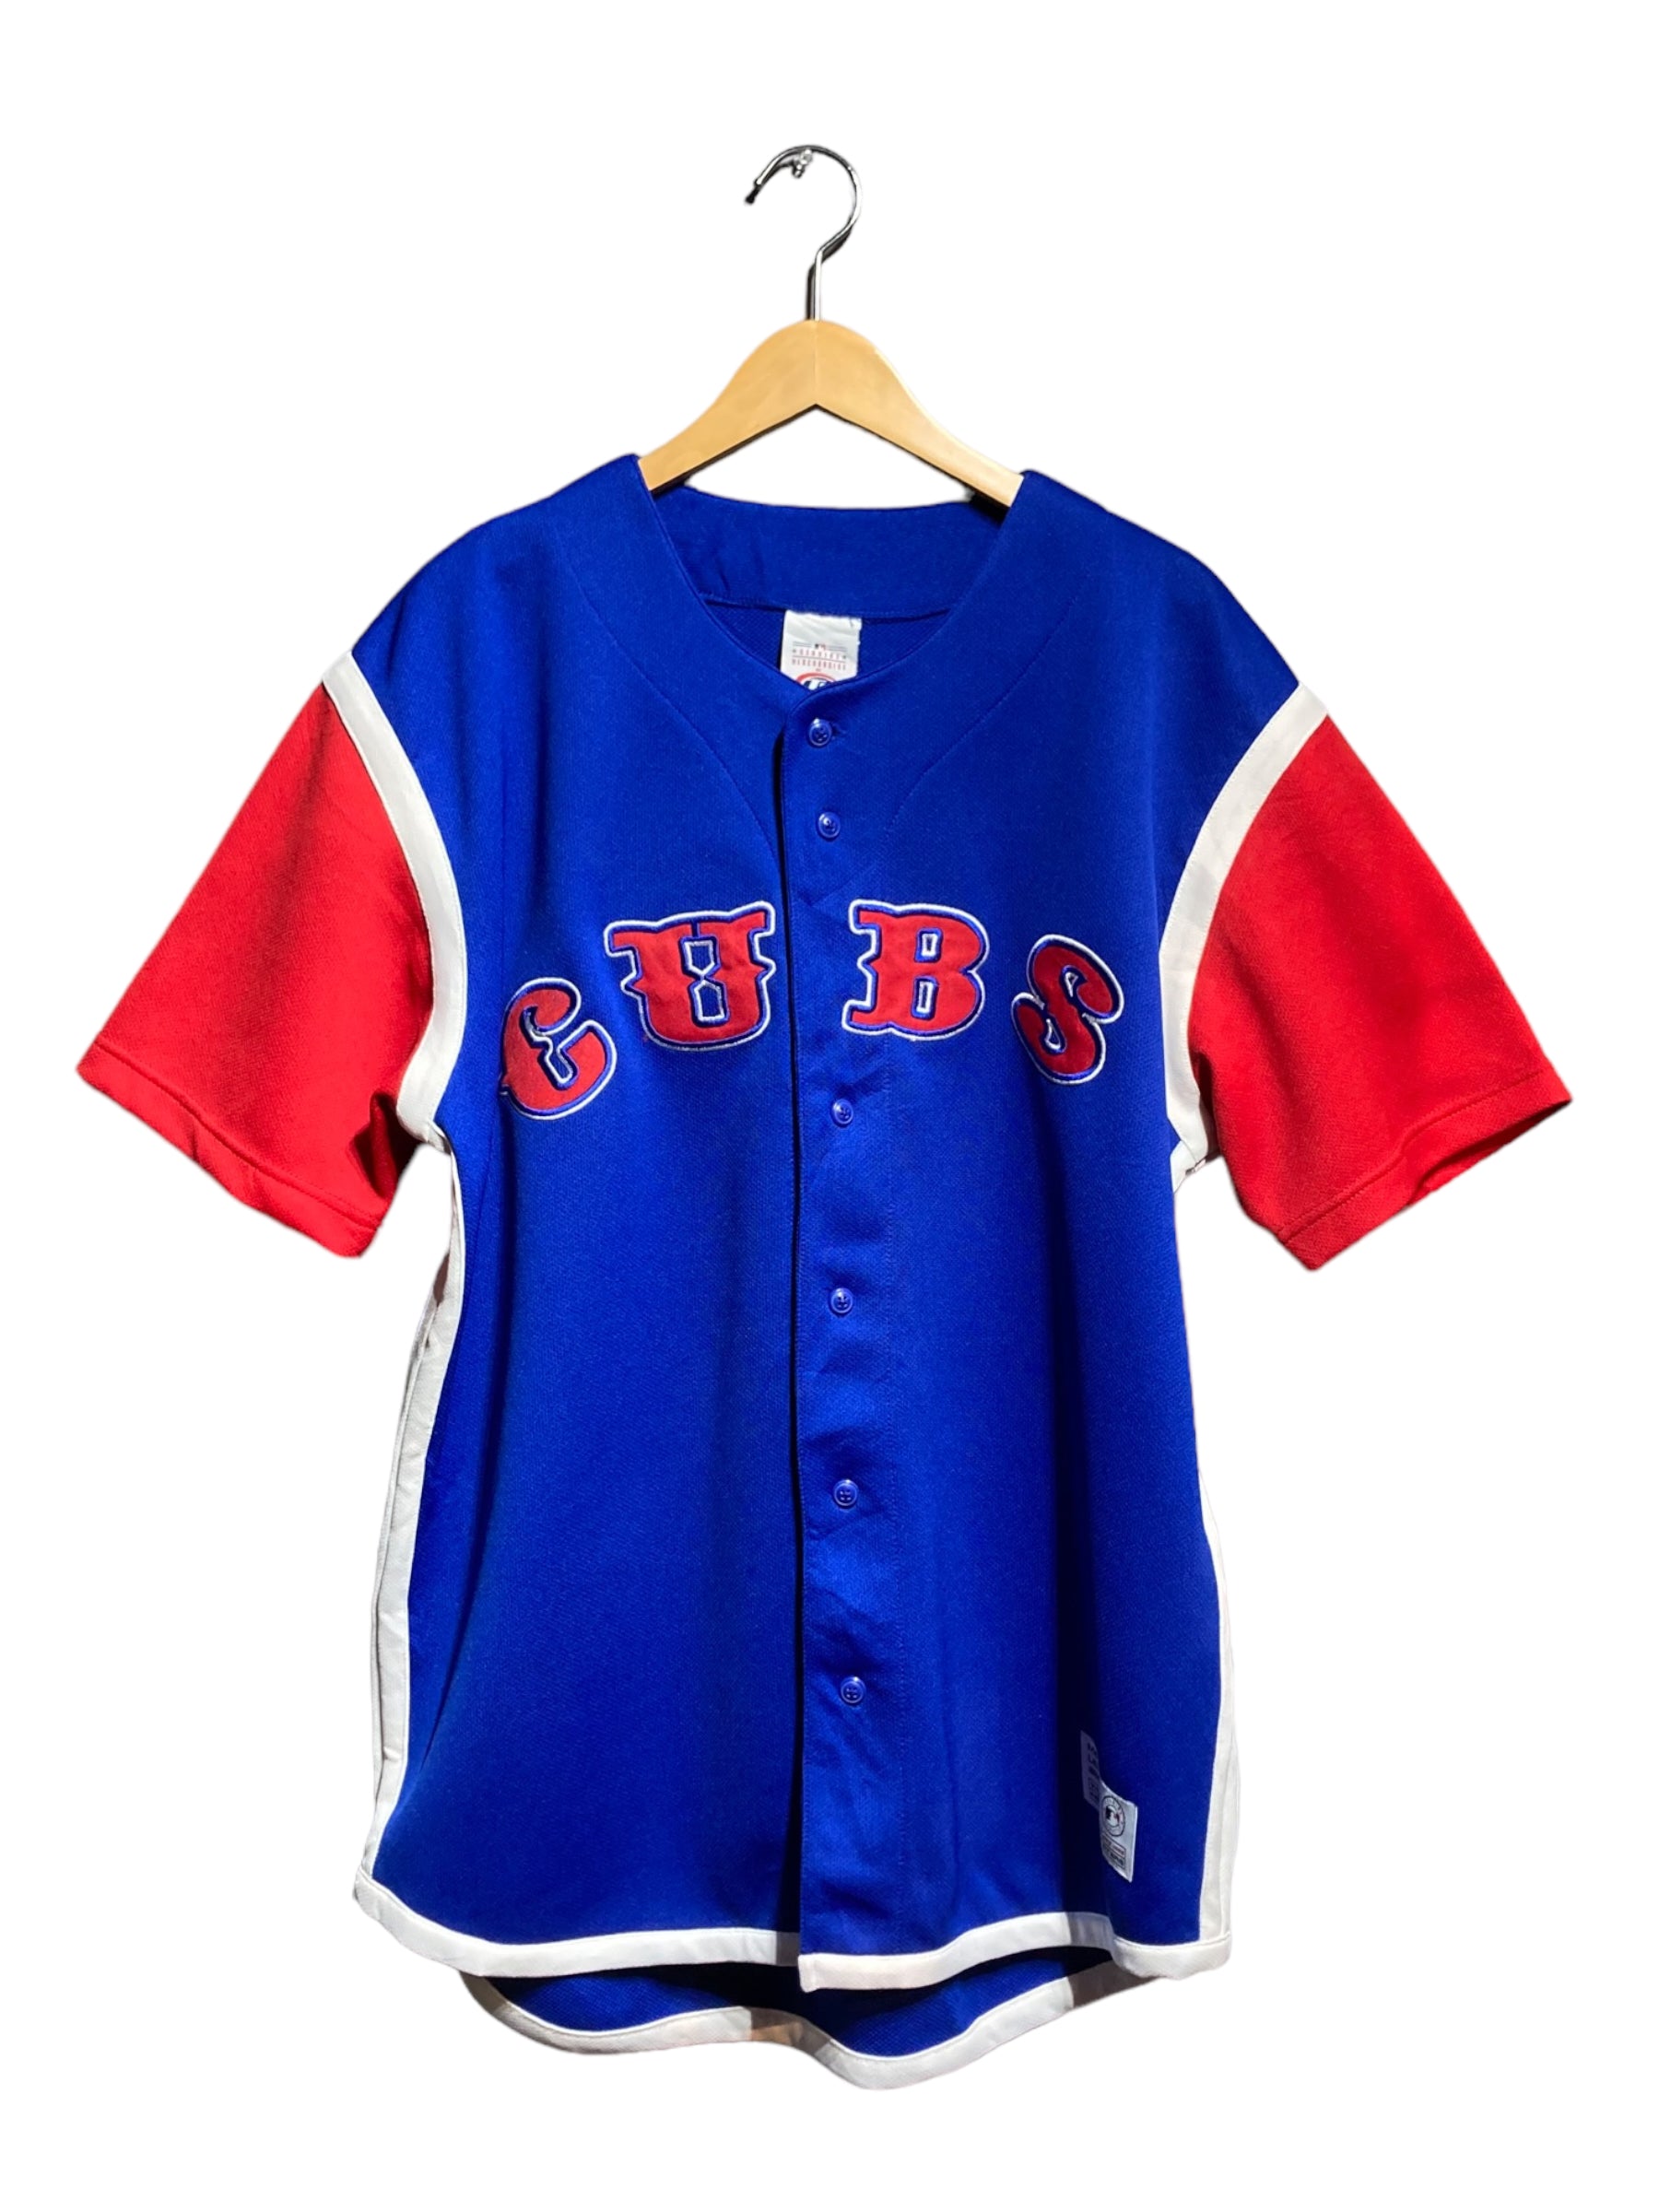 TRUE FAN CUBS カブス MLB BASEBALL ベースボールシャツ ユニフォーム